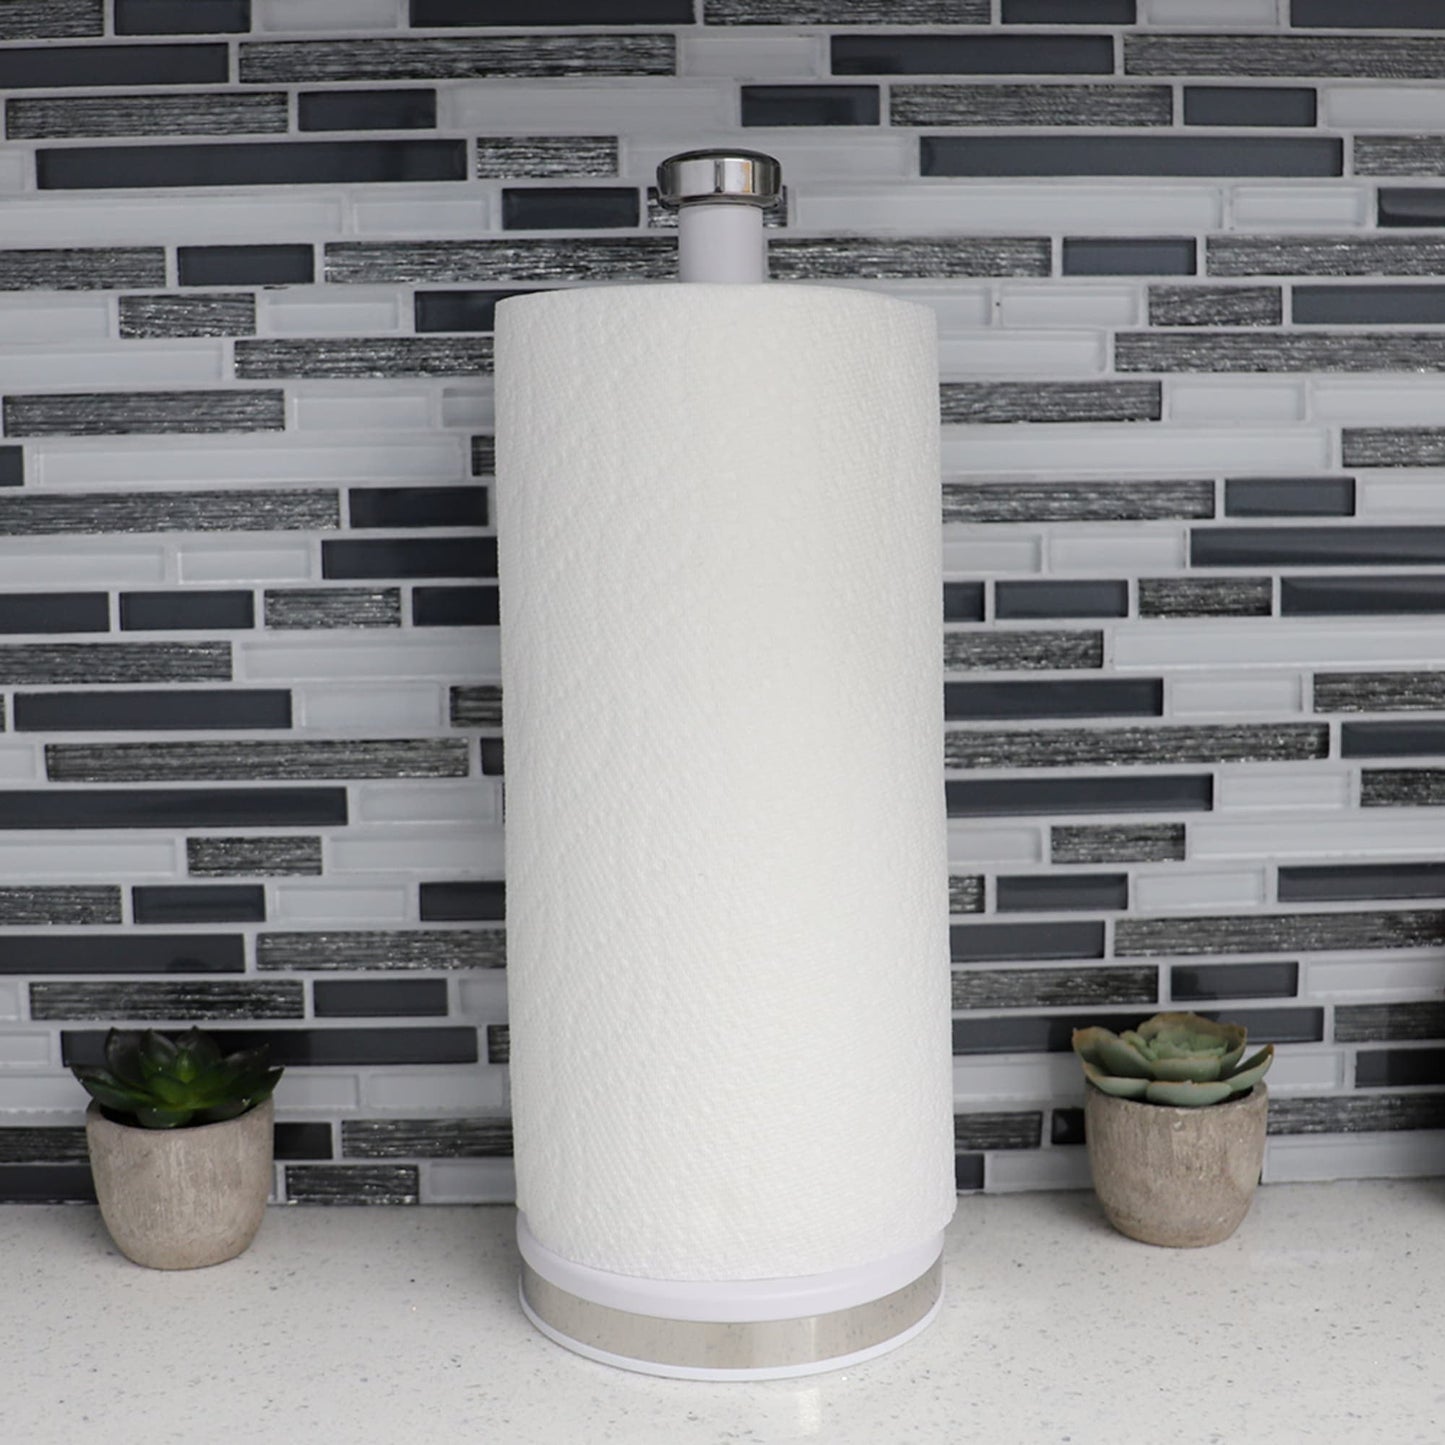 Michael Graves Design Soho Freestanding Tin Paper Towel Holder with Easy Twist On Finial, White